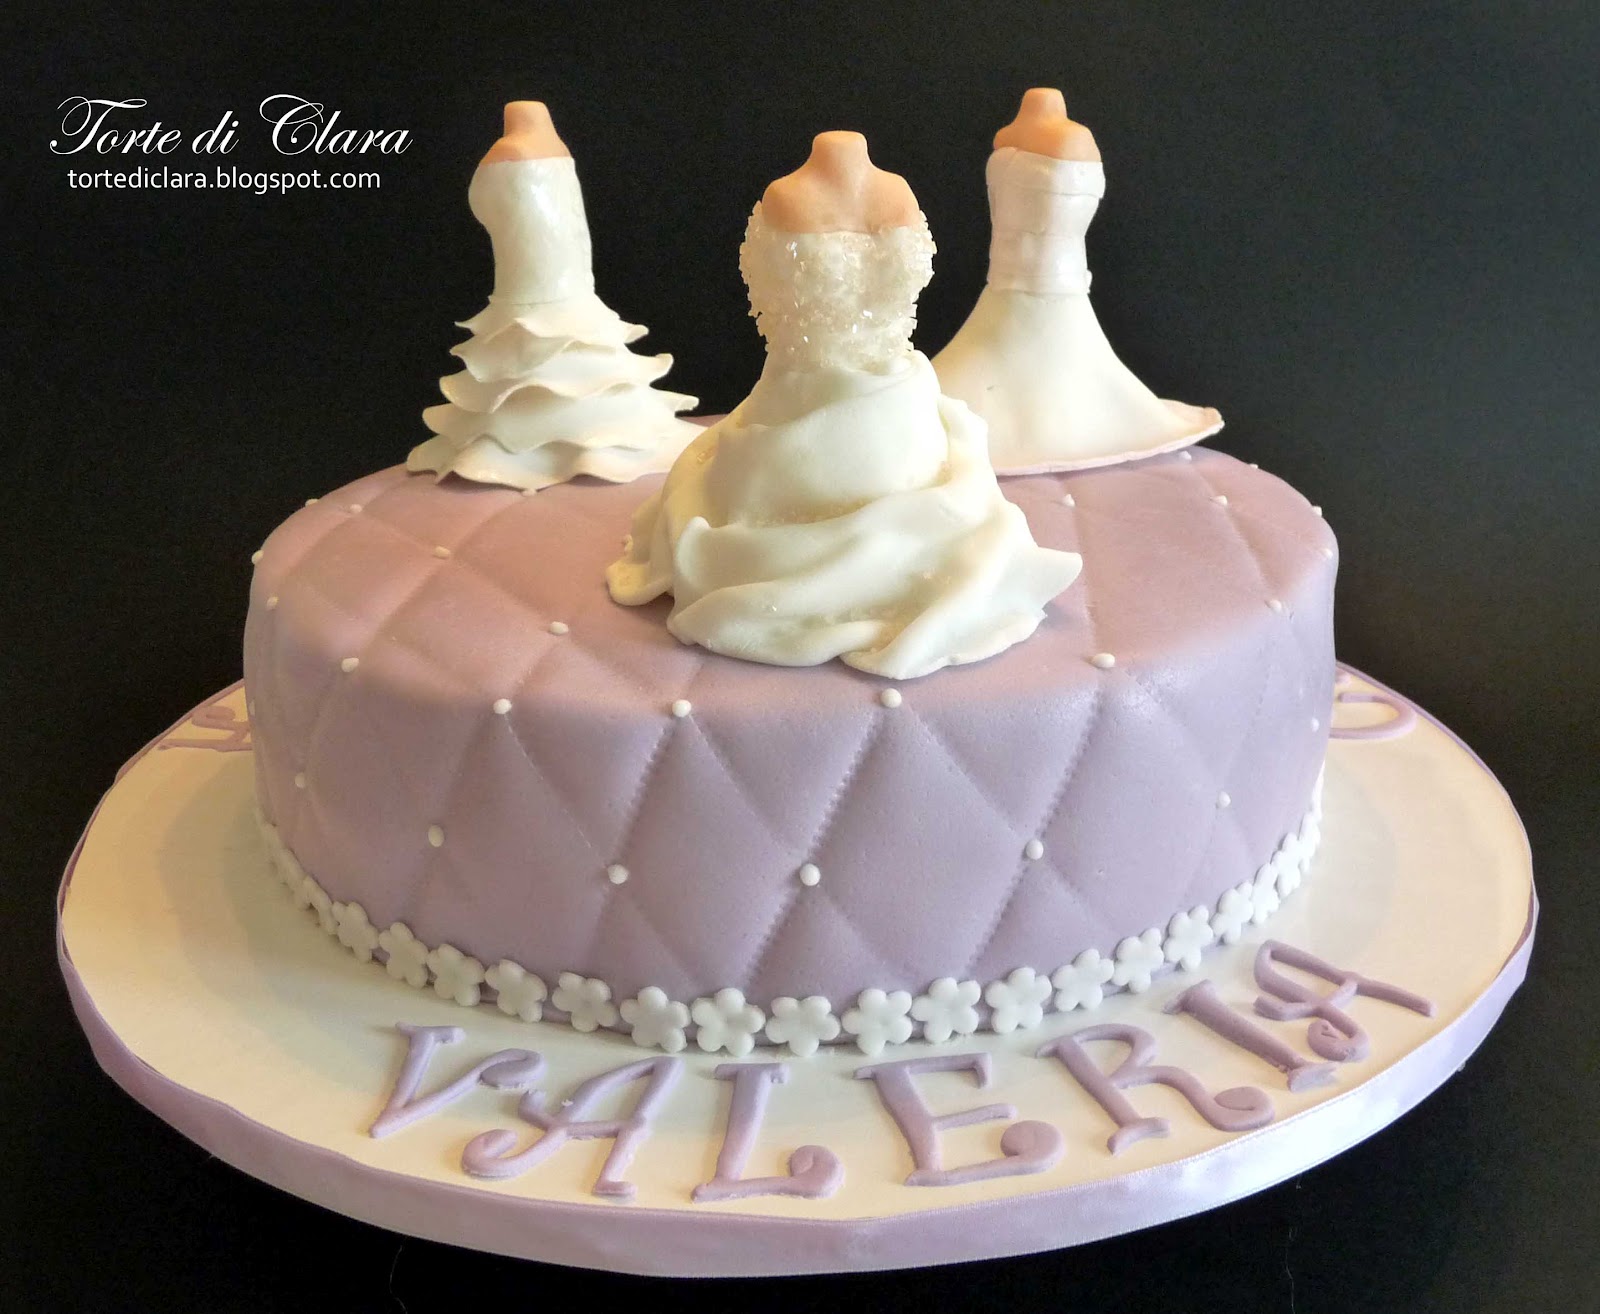 https://blogger.googleusercontent.com/img/b/R29vZ2xl/AVvXsEhg9iuXmRoAUq6OqGFcqPgAvFSlAdtbPPHaT7pUeDcS9PfsAIVfLltmrVghShwPdXZ8CSBACyhGTxdULX6CeeQZfGg9C52I4QRPUMdj9KTwO4mYqi7dpB6HR8C6LxdkOI04HhbDTQaa6kU/s1600/wedding_dress_cake_1.jpg